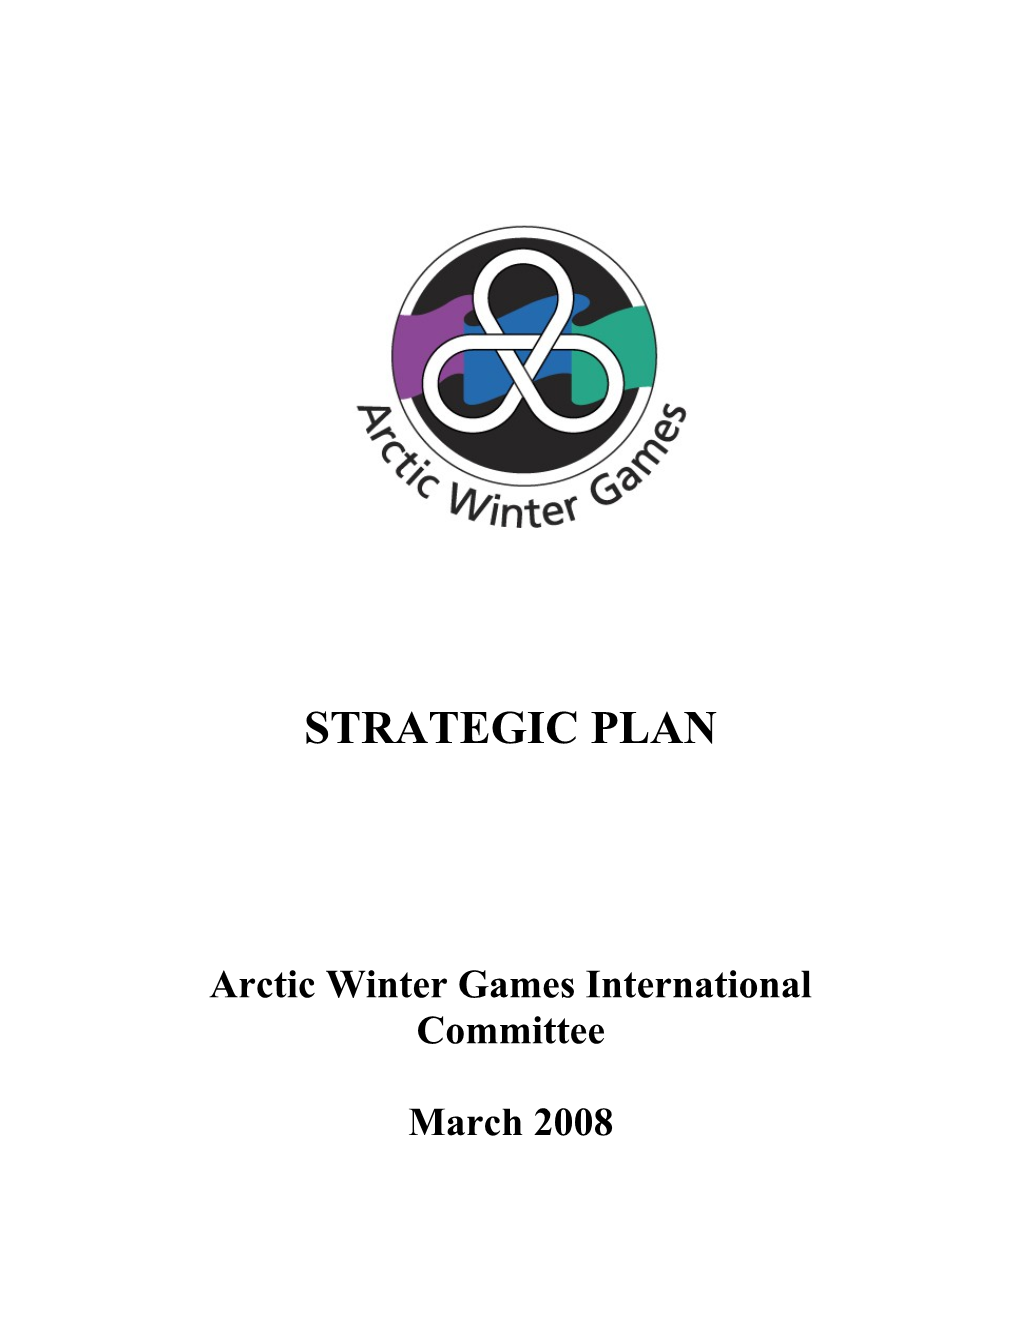 Arctic Winter Games International Committee